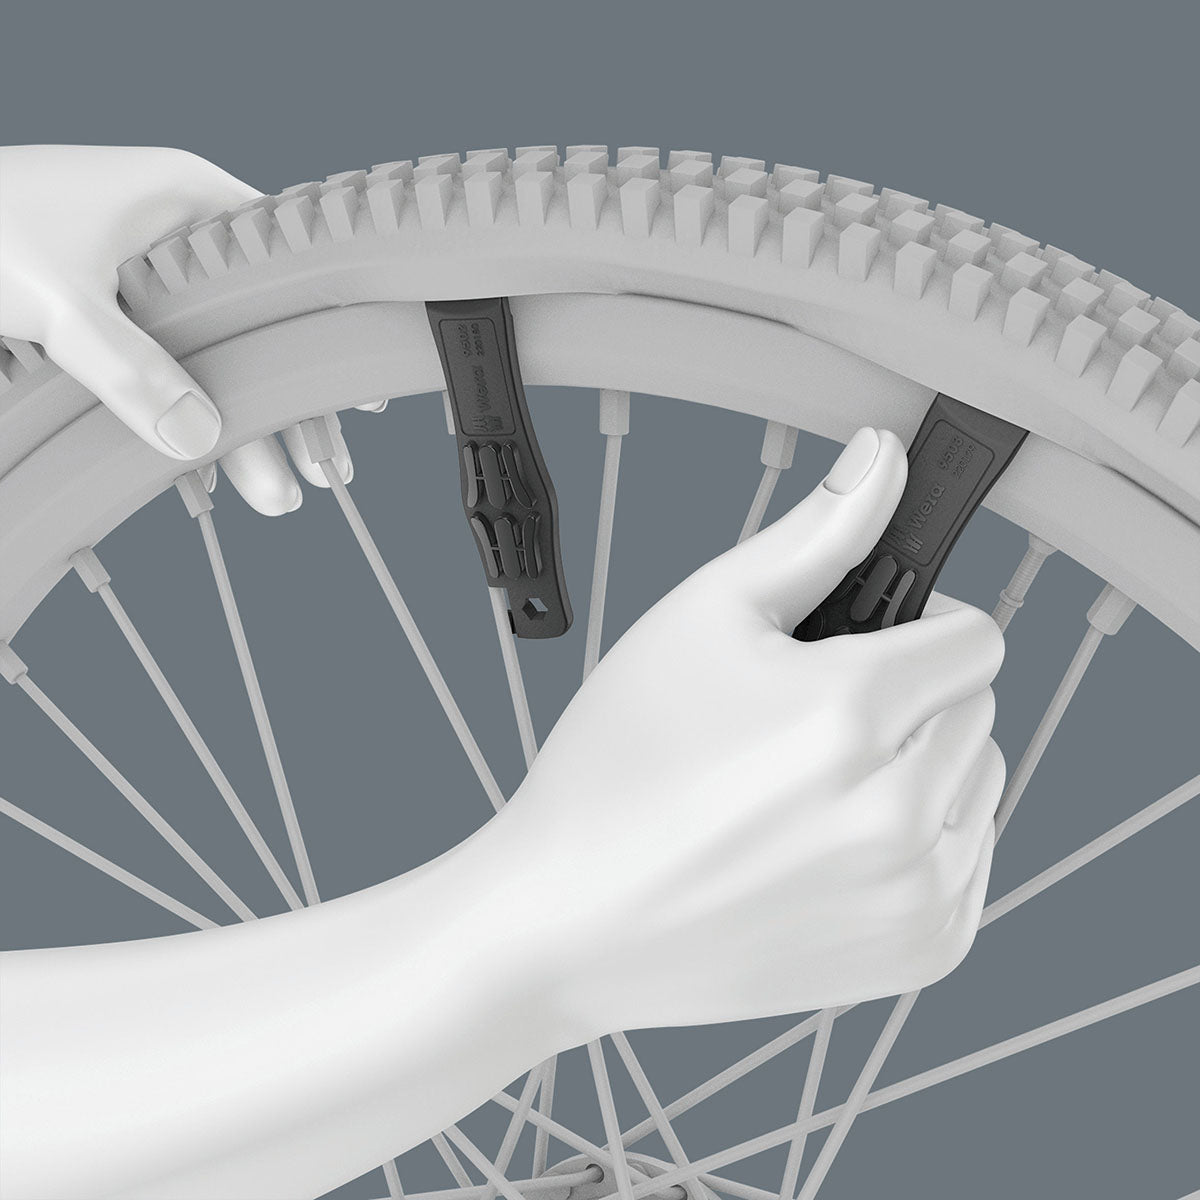 Wera Tool Set For Bicycles/e-bikes - 12 Piece